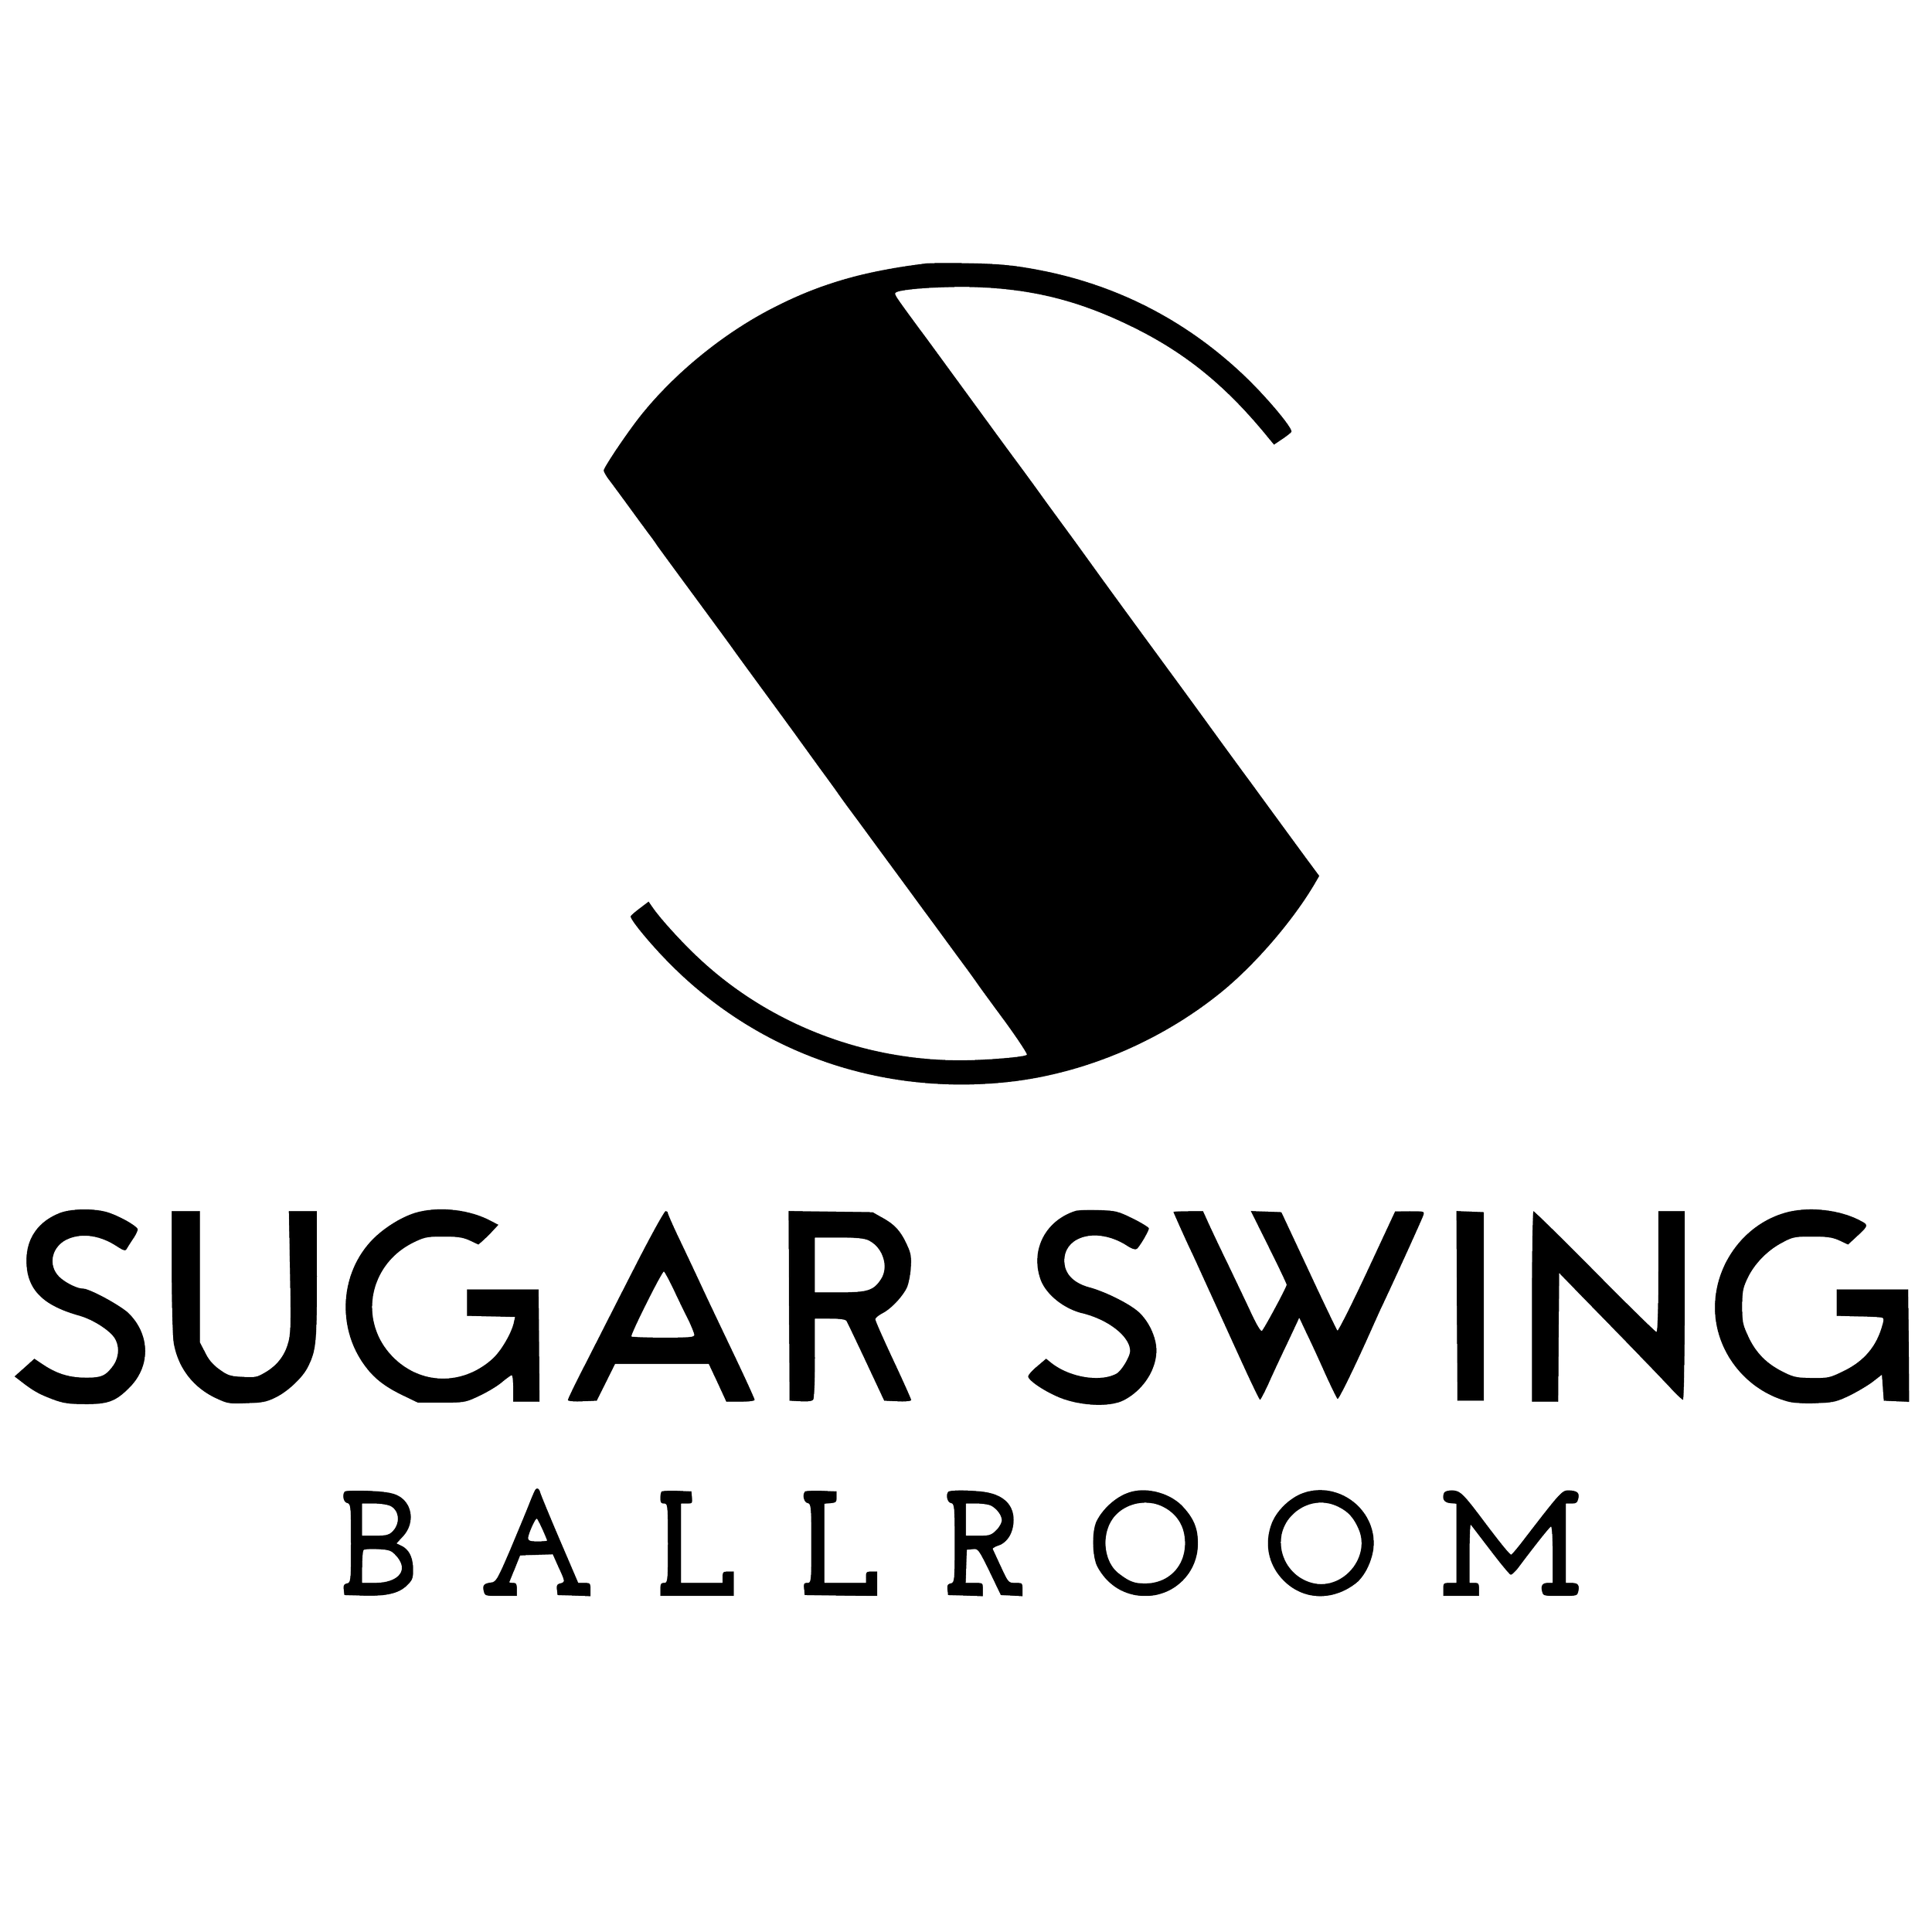 Sugar Swing Ballroom Logo.png